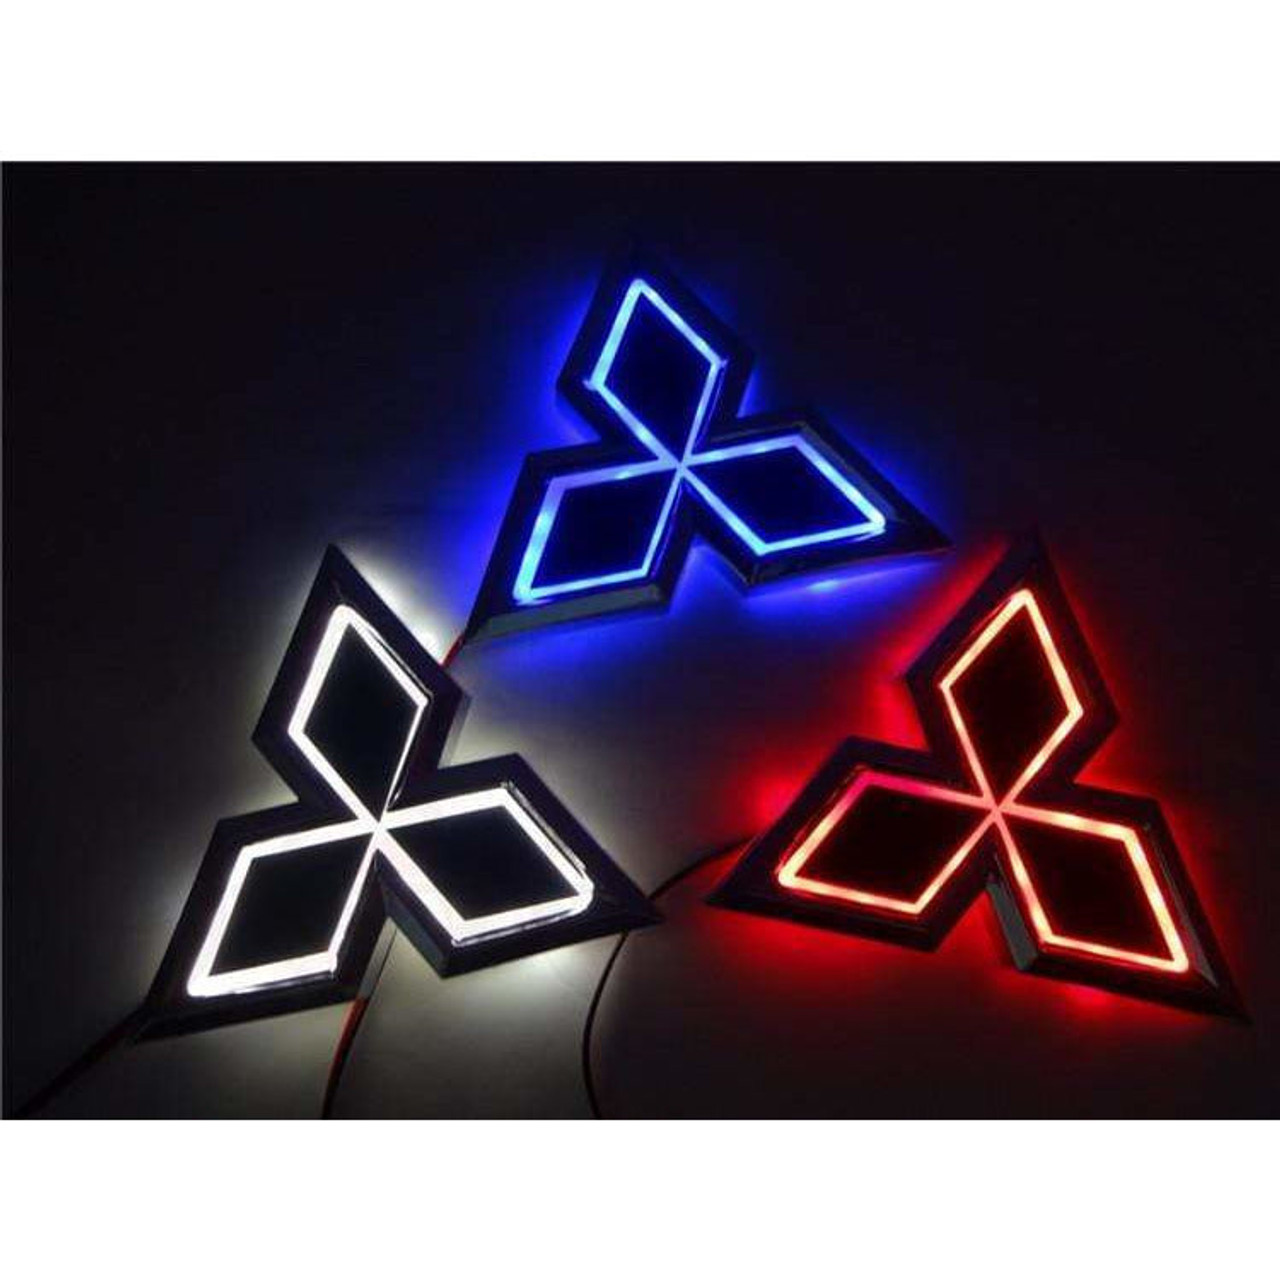 Led mitsubishi. Логотип Митсубиси. Знак Митсубиси с подсветкой. Логотип Мицубиси с подсветкой. Mitsubishi ASX логотип.